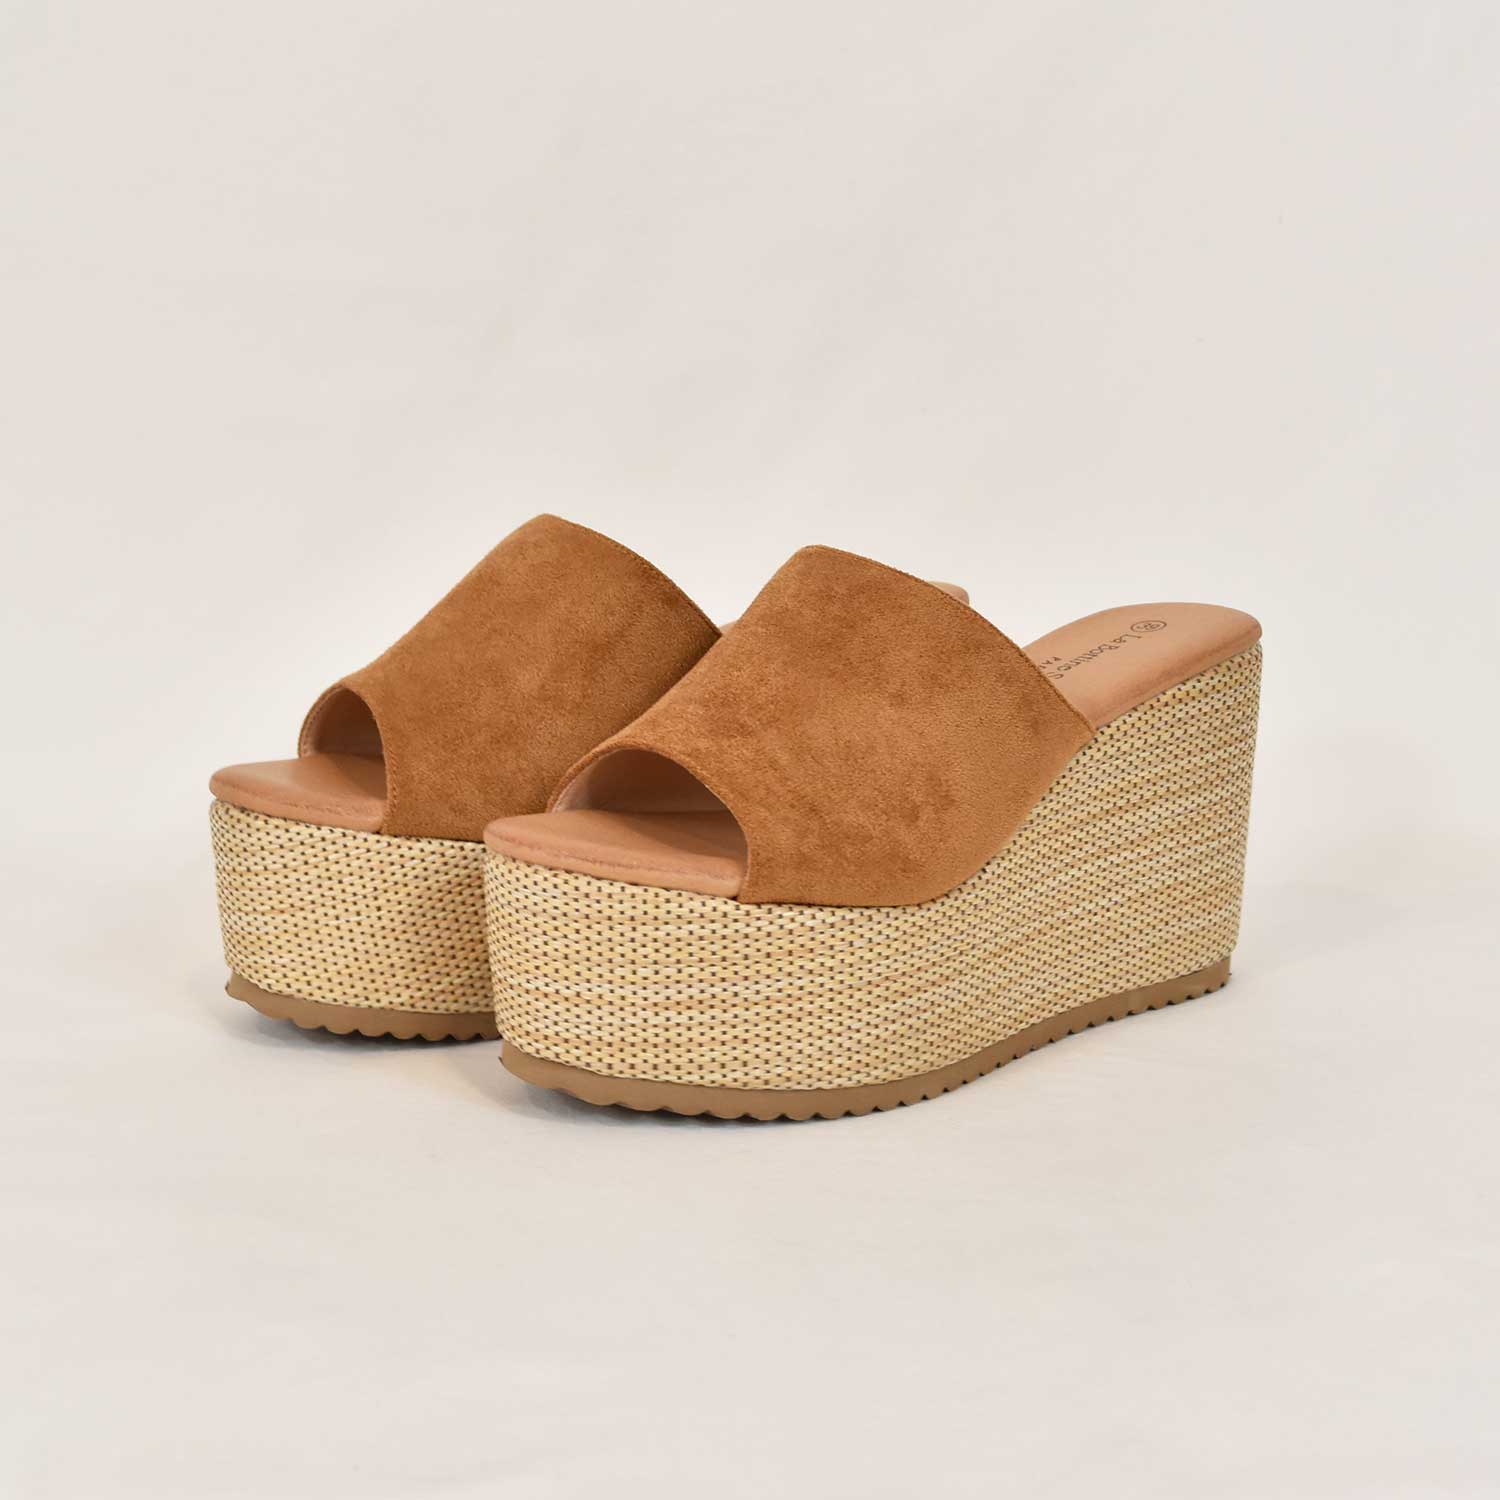 Brown platform sandal